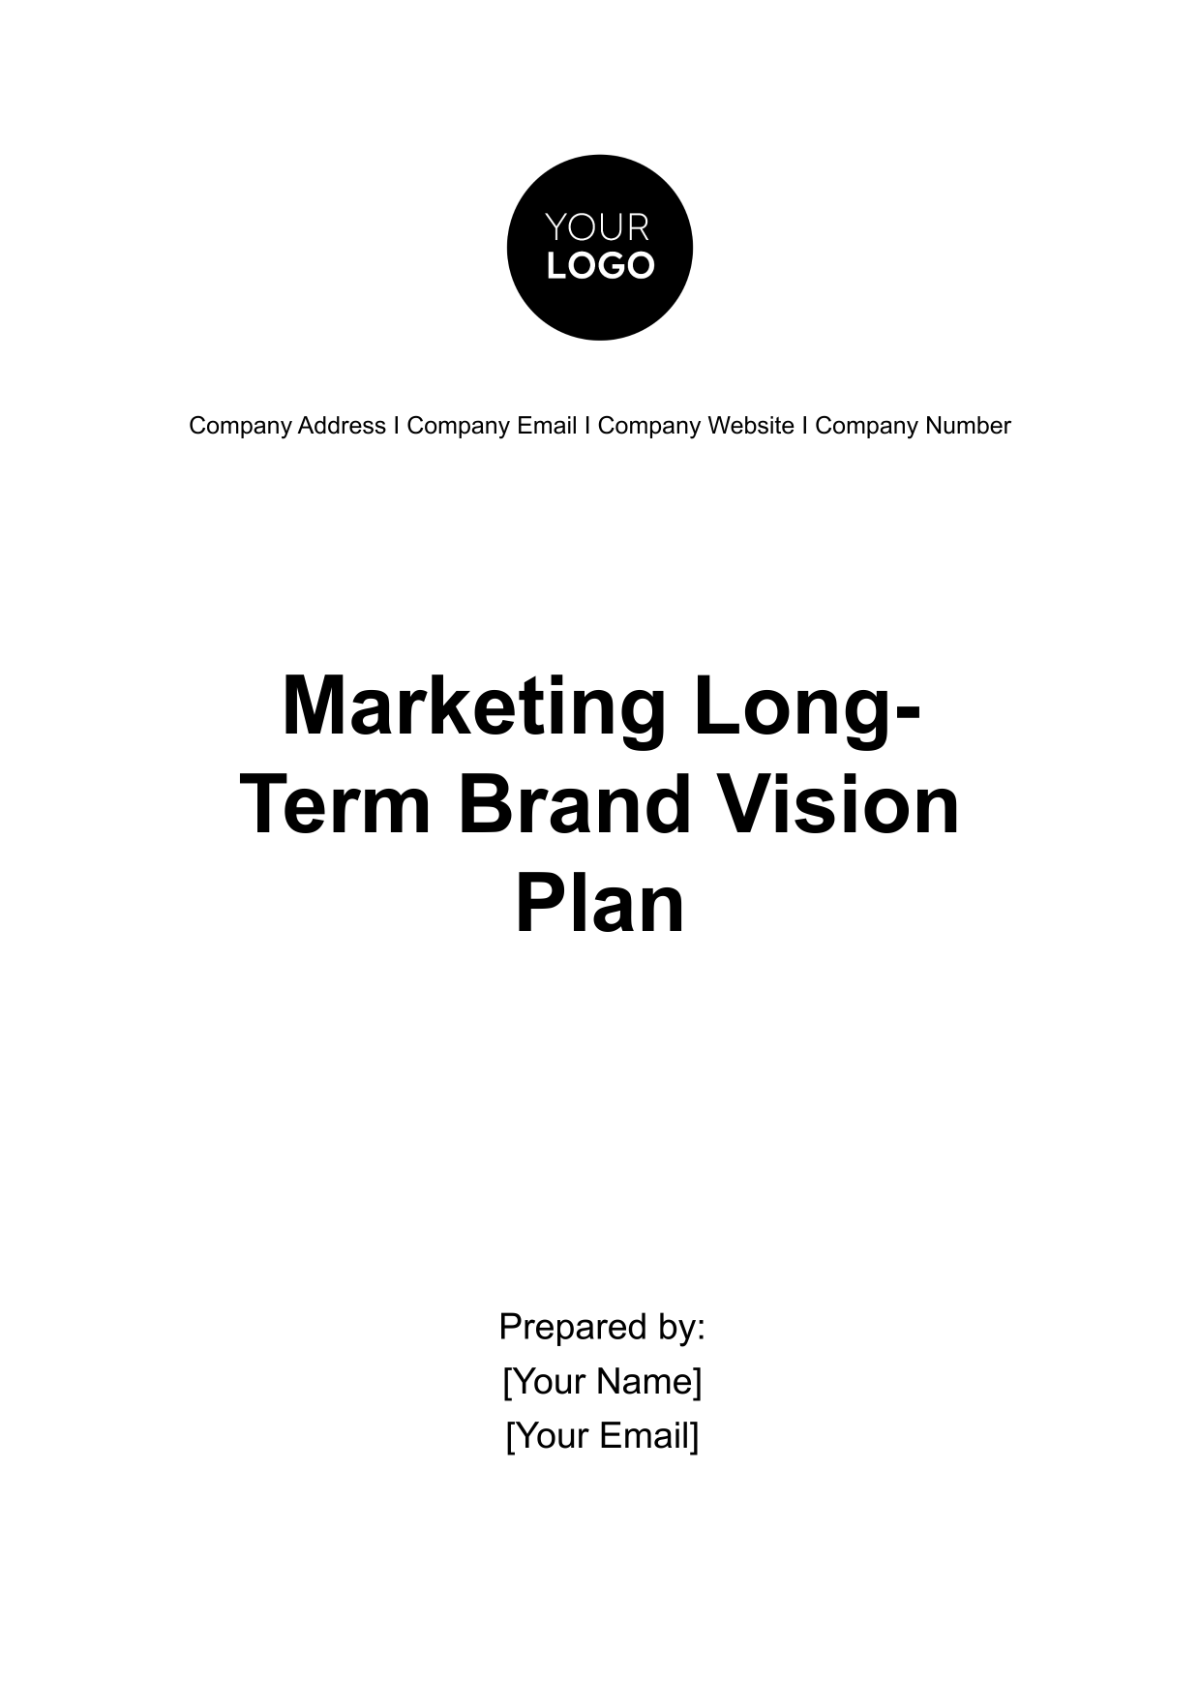 Marketing Long-term Brand Vision Plan Template